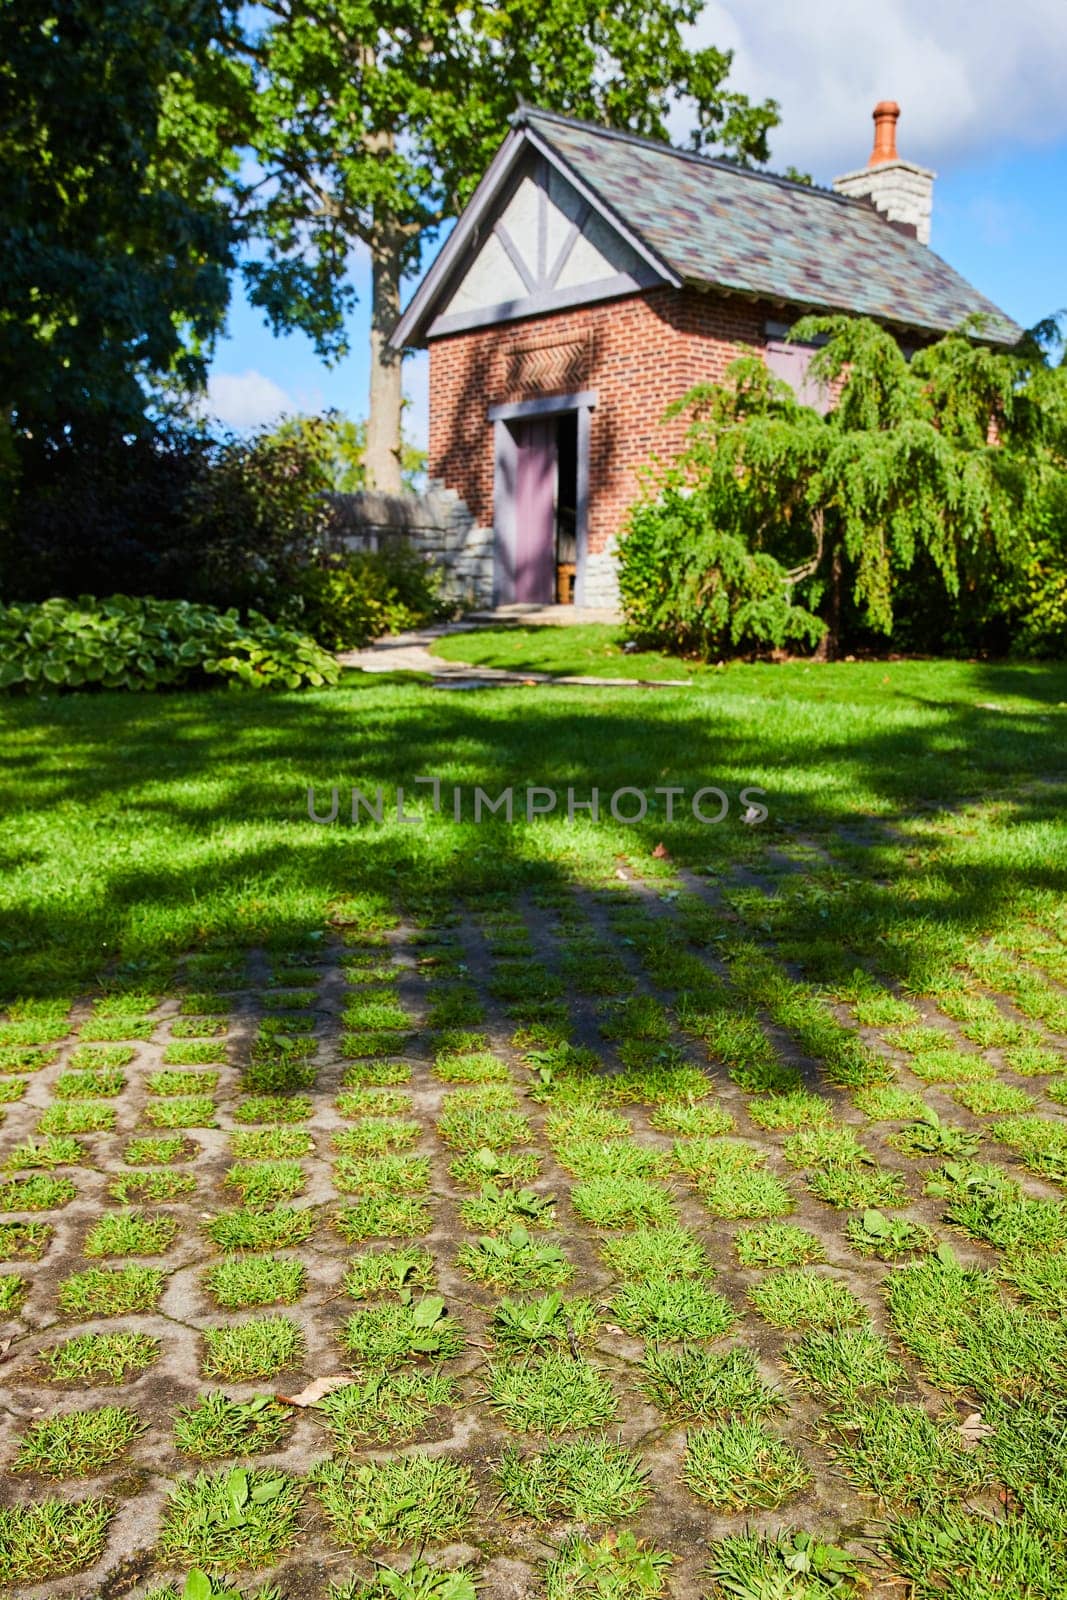 Charming historic brick cottage with purple door nestled in sunlit Botanic Gardens, Elkhart, Indiana, offering a serene retreat